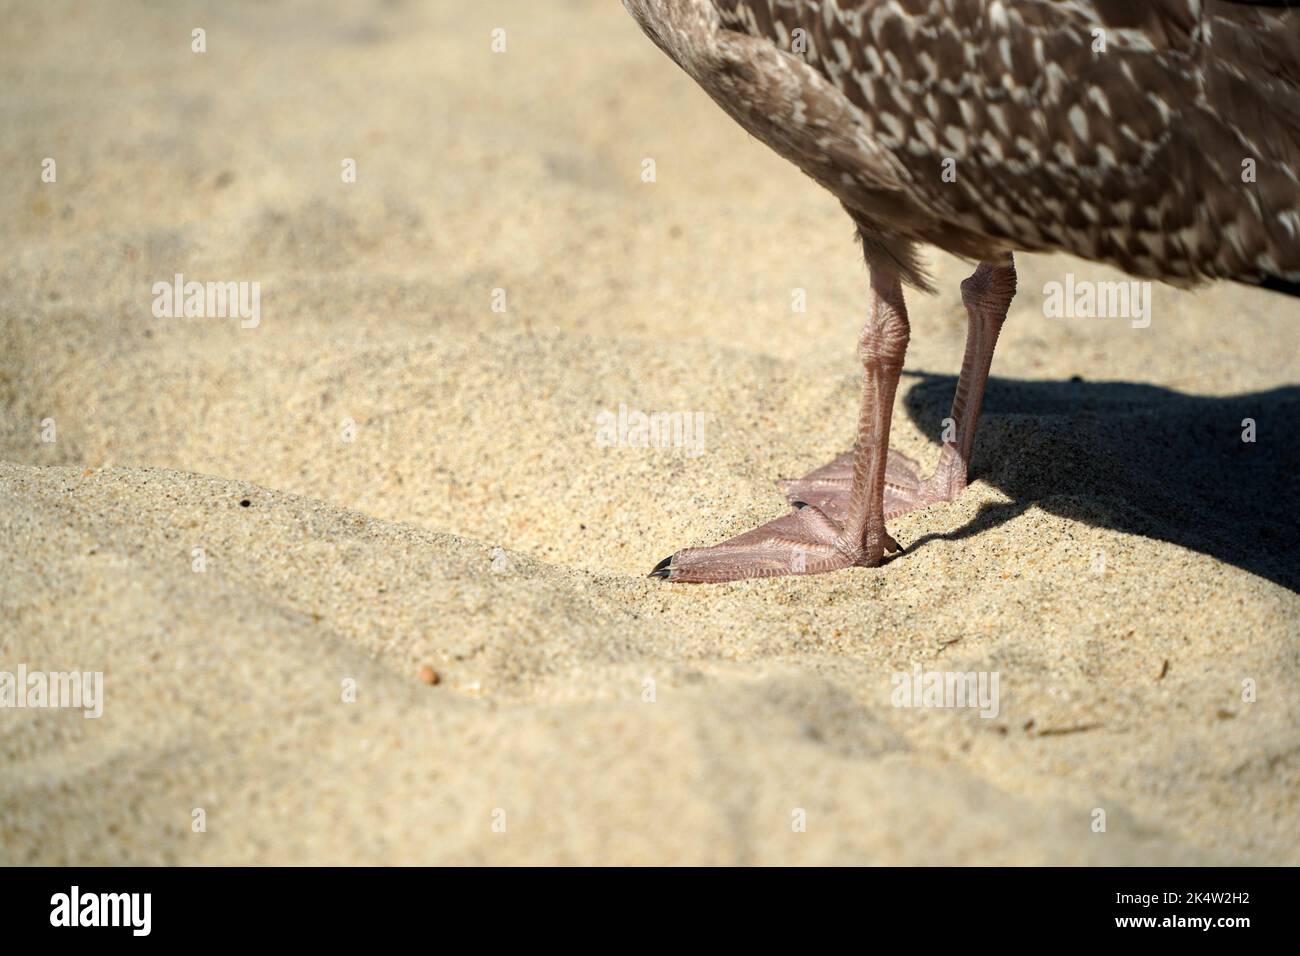 detail of paws of a seagull on nantucket island sandy beach atlantic ocean Stock Photo